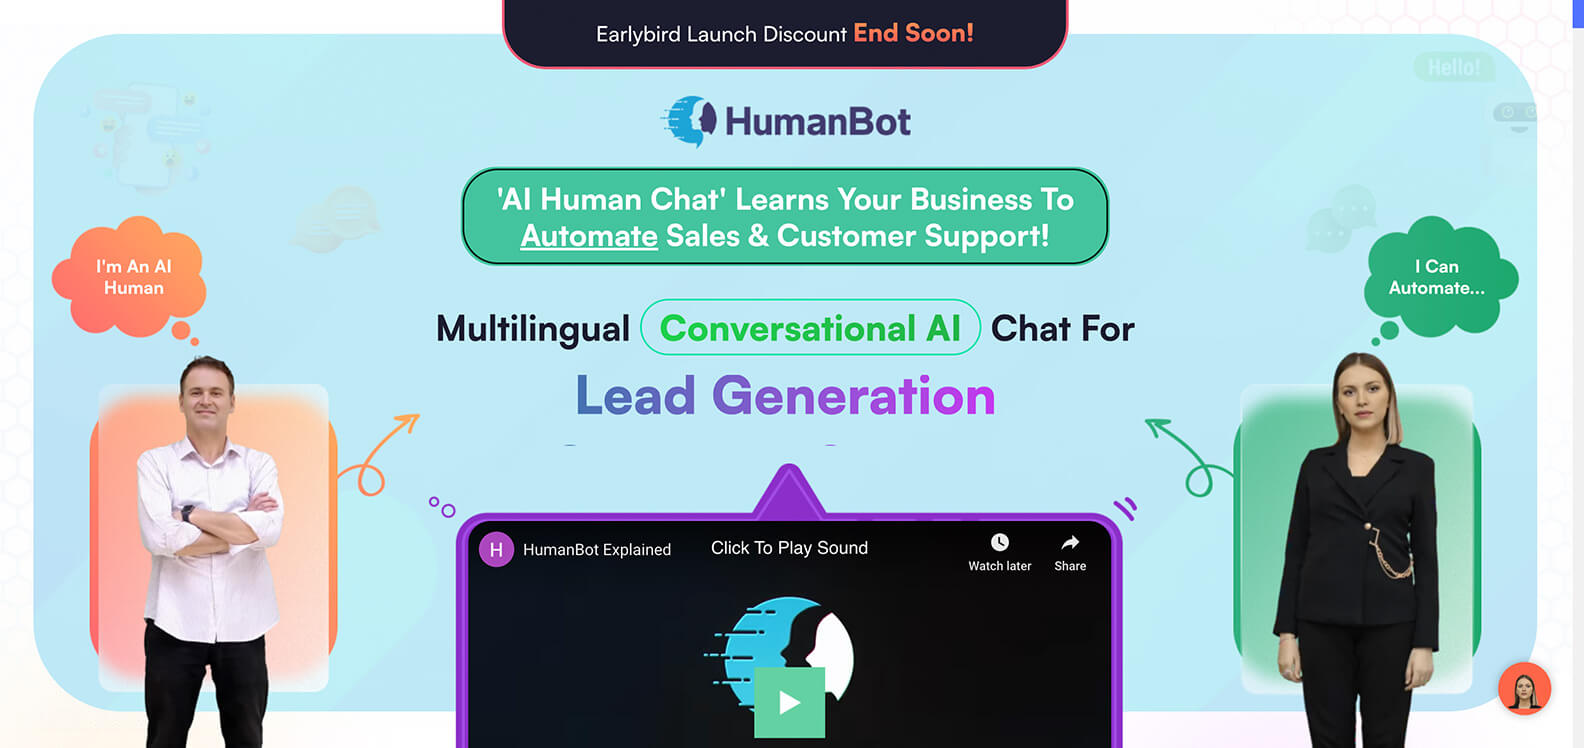 Post: Humanbot